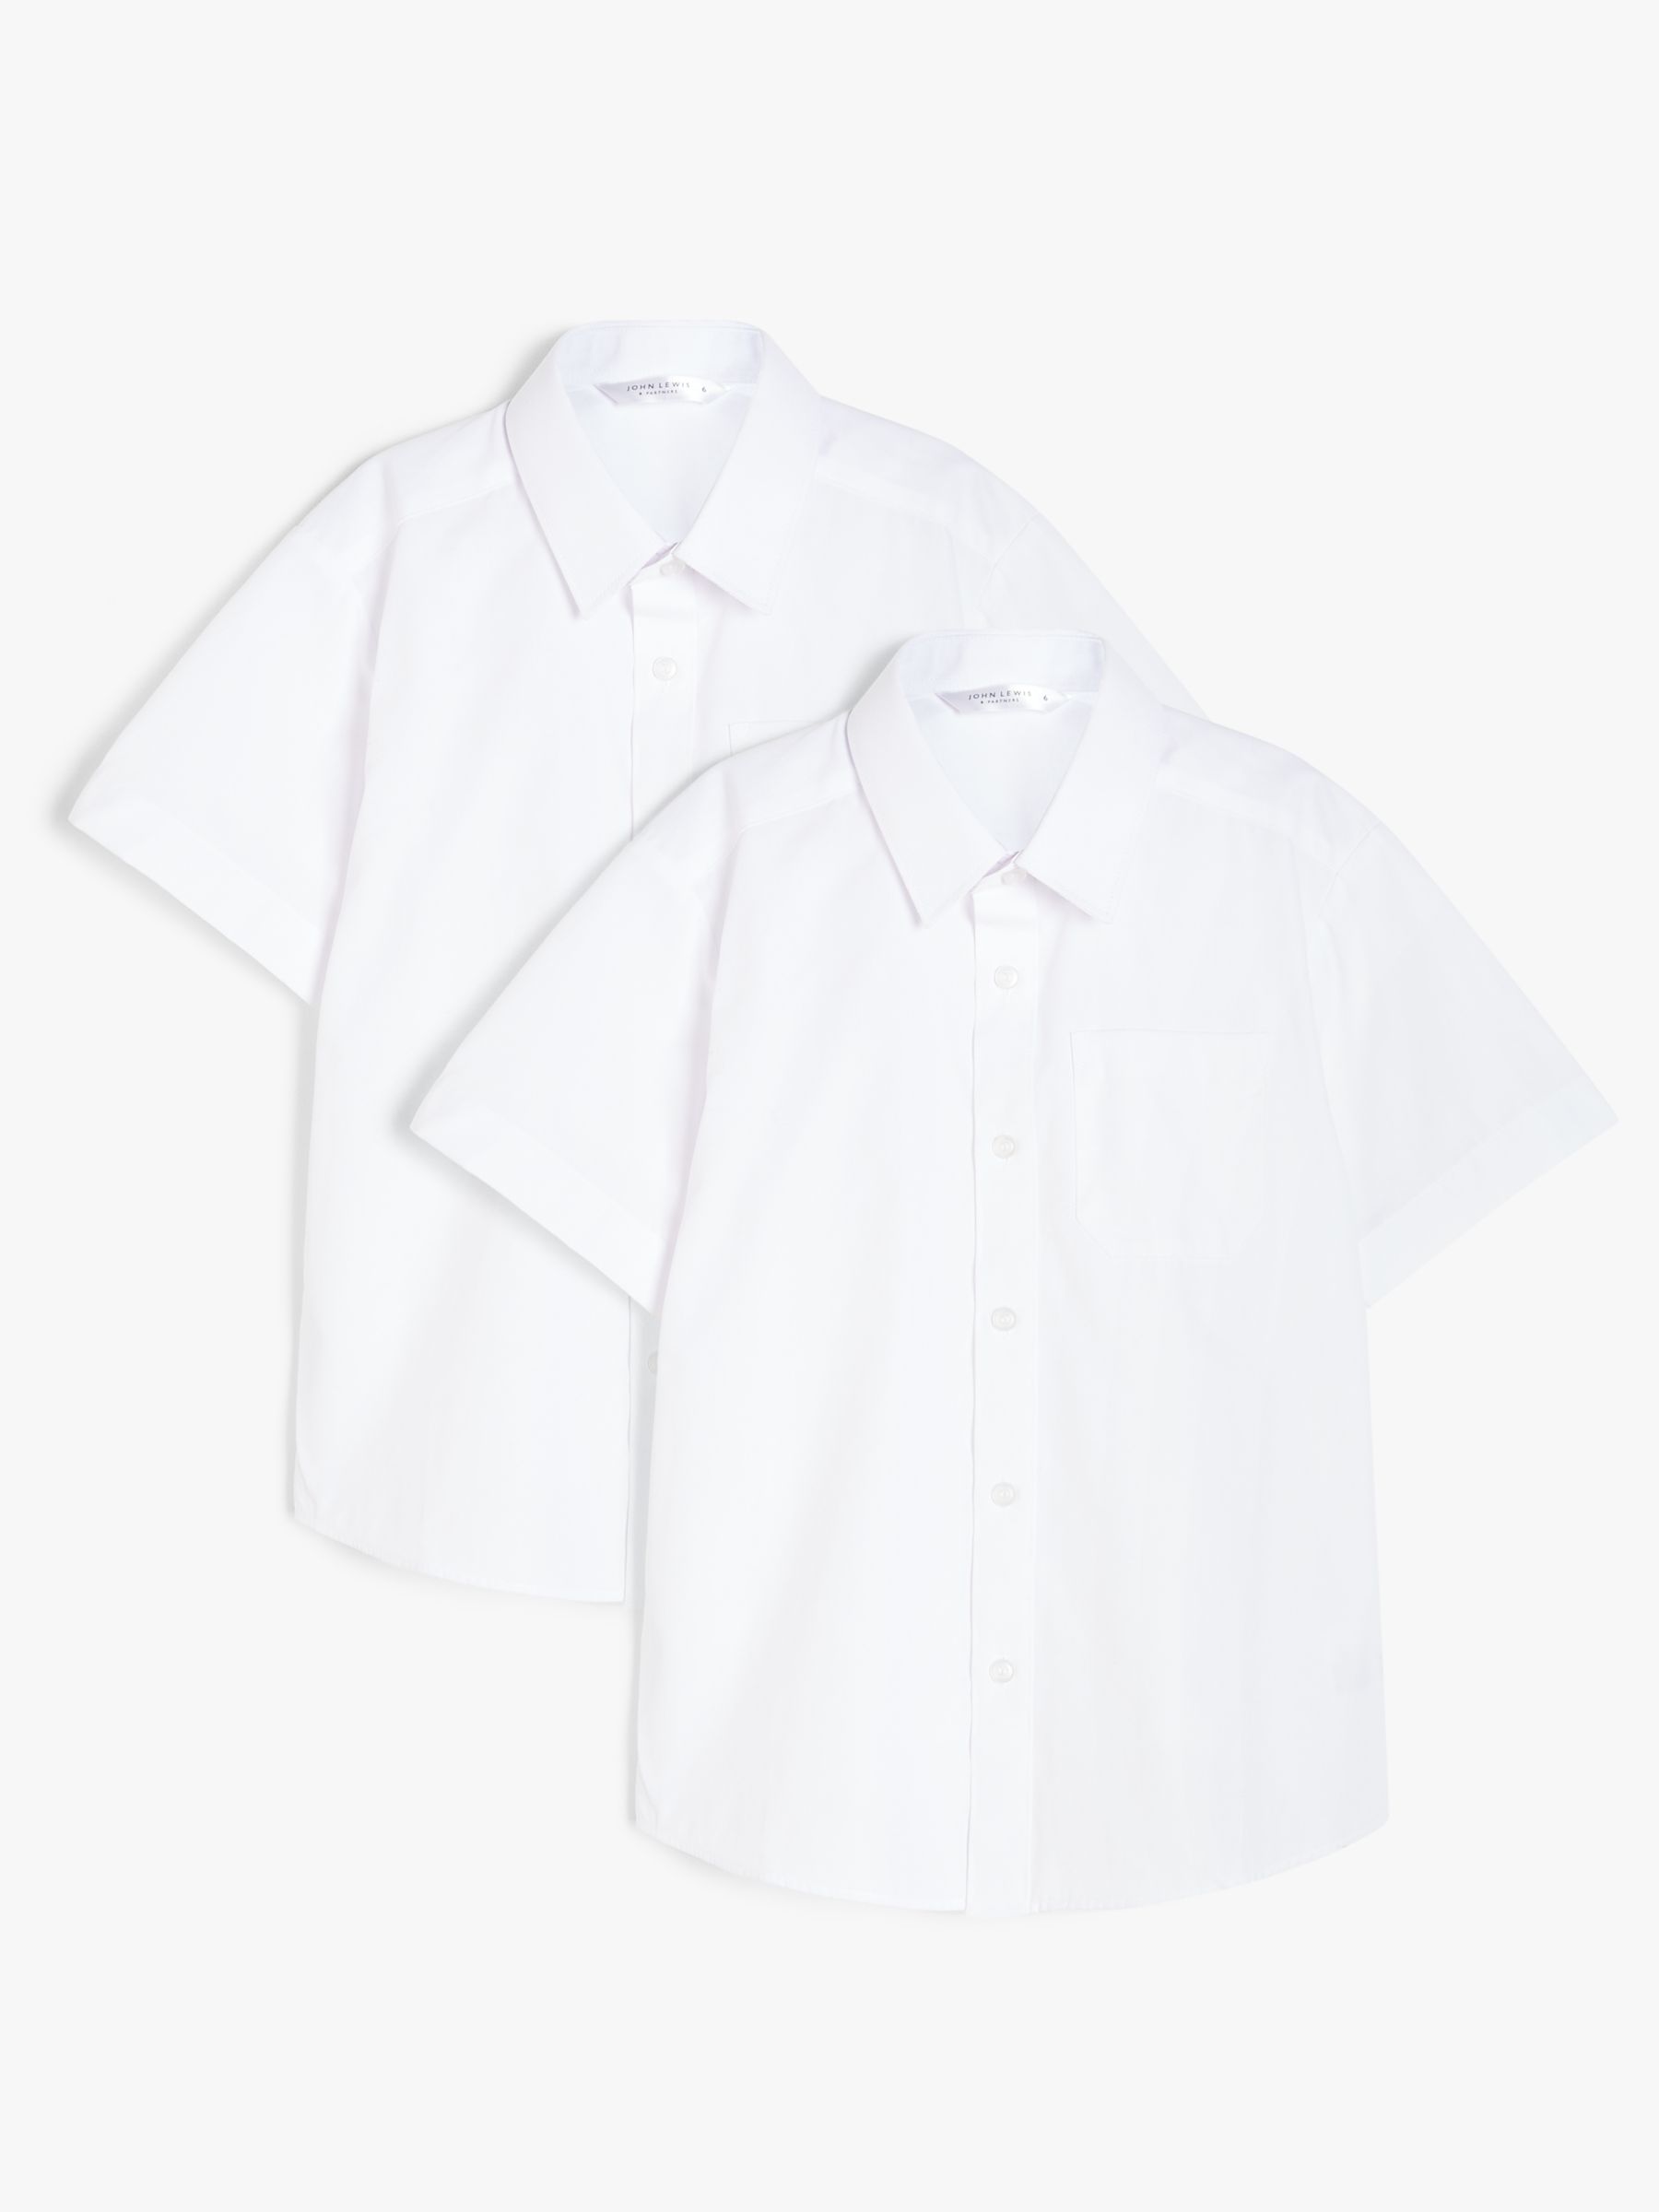 John Lewis & Partners Boys' Short Sleeved Stain Resistant Easy Care Shirt, Pack of 2